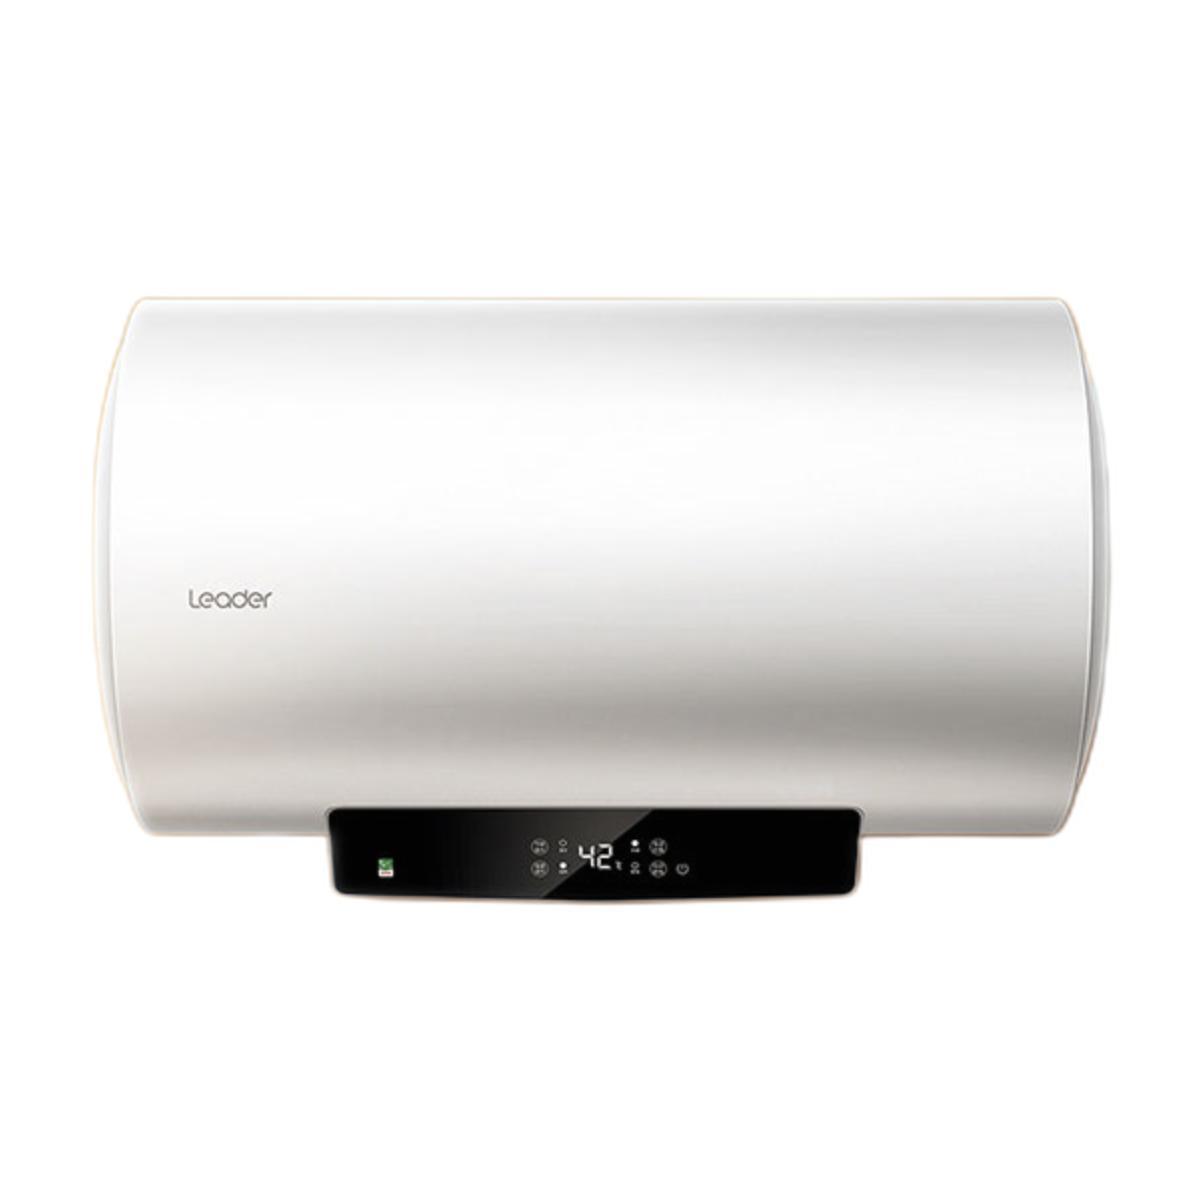 Haier 海尔 LEC6001-LD5 储水式热水器 60L 白色 2200W 759元